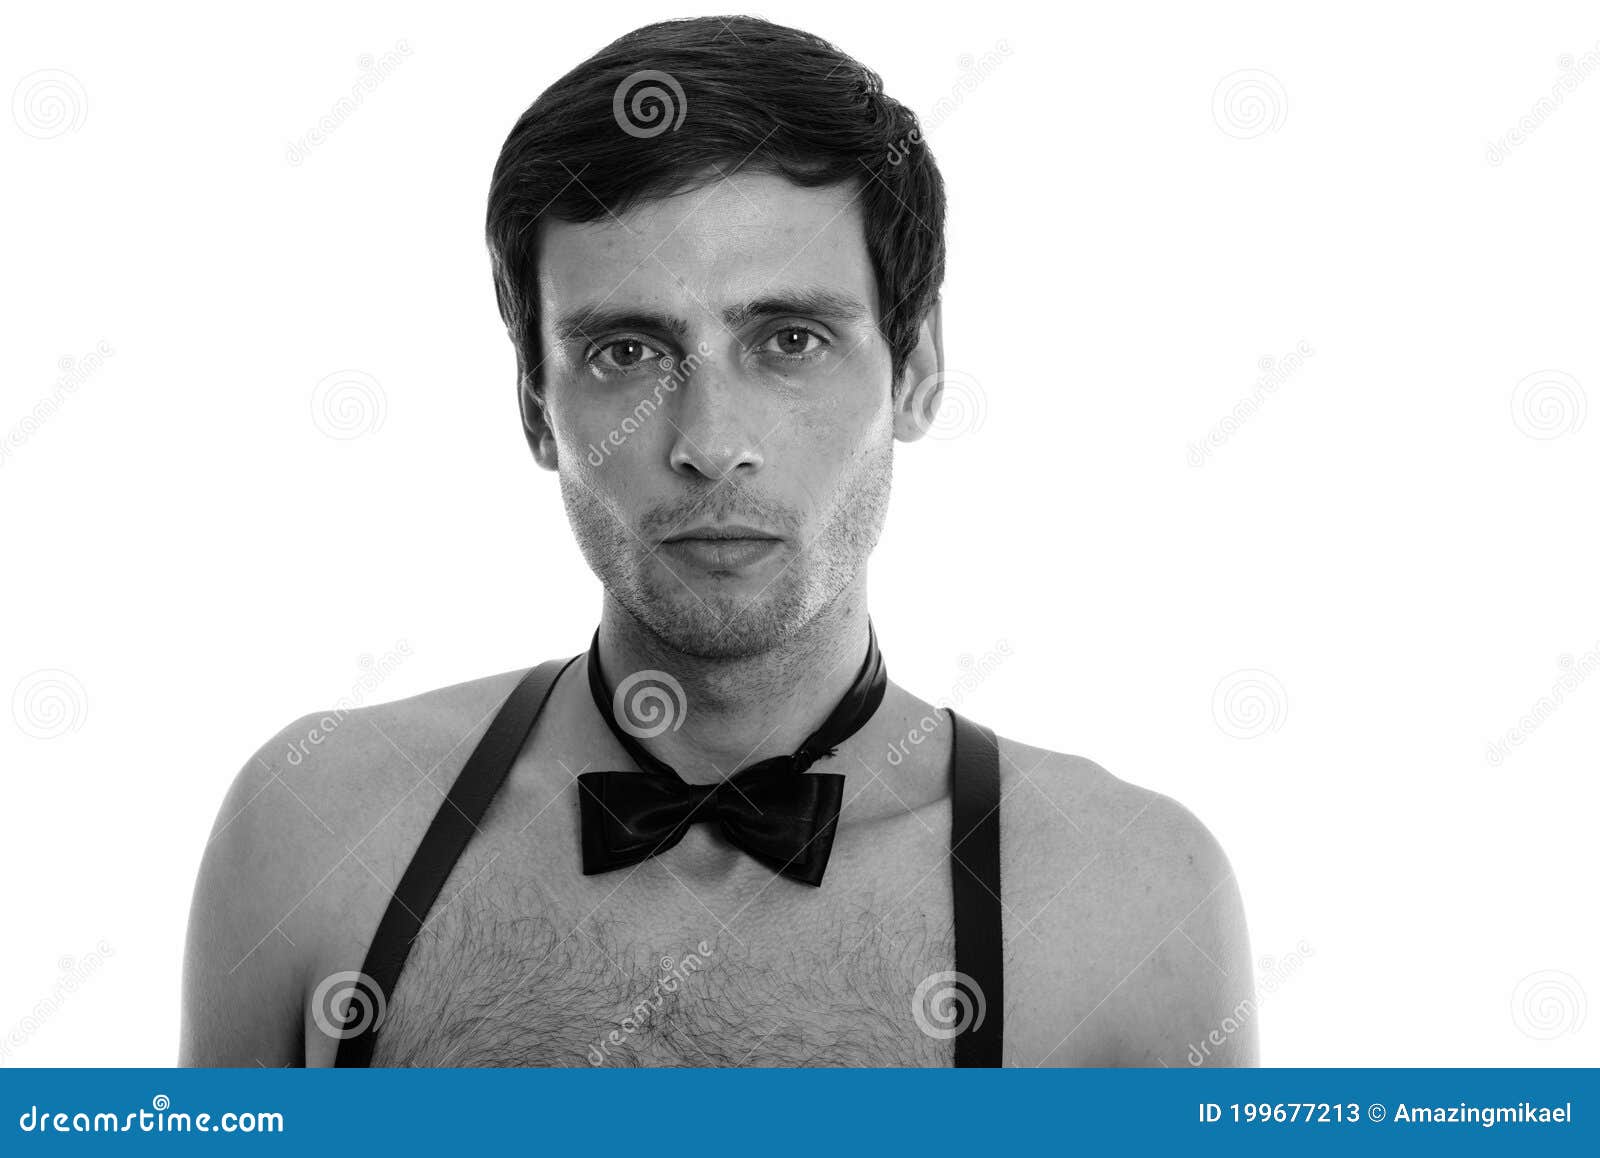 Man Shirtless With Suspenders Stock Photography | CartoonDealer.com ...